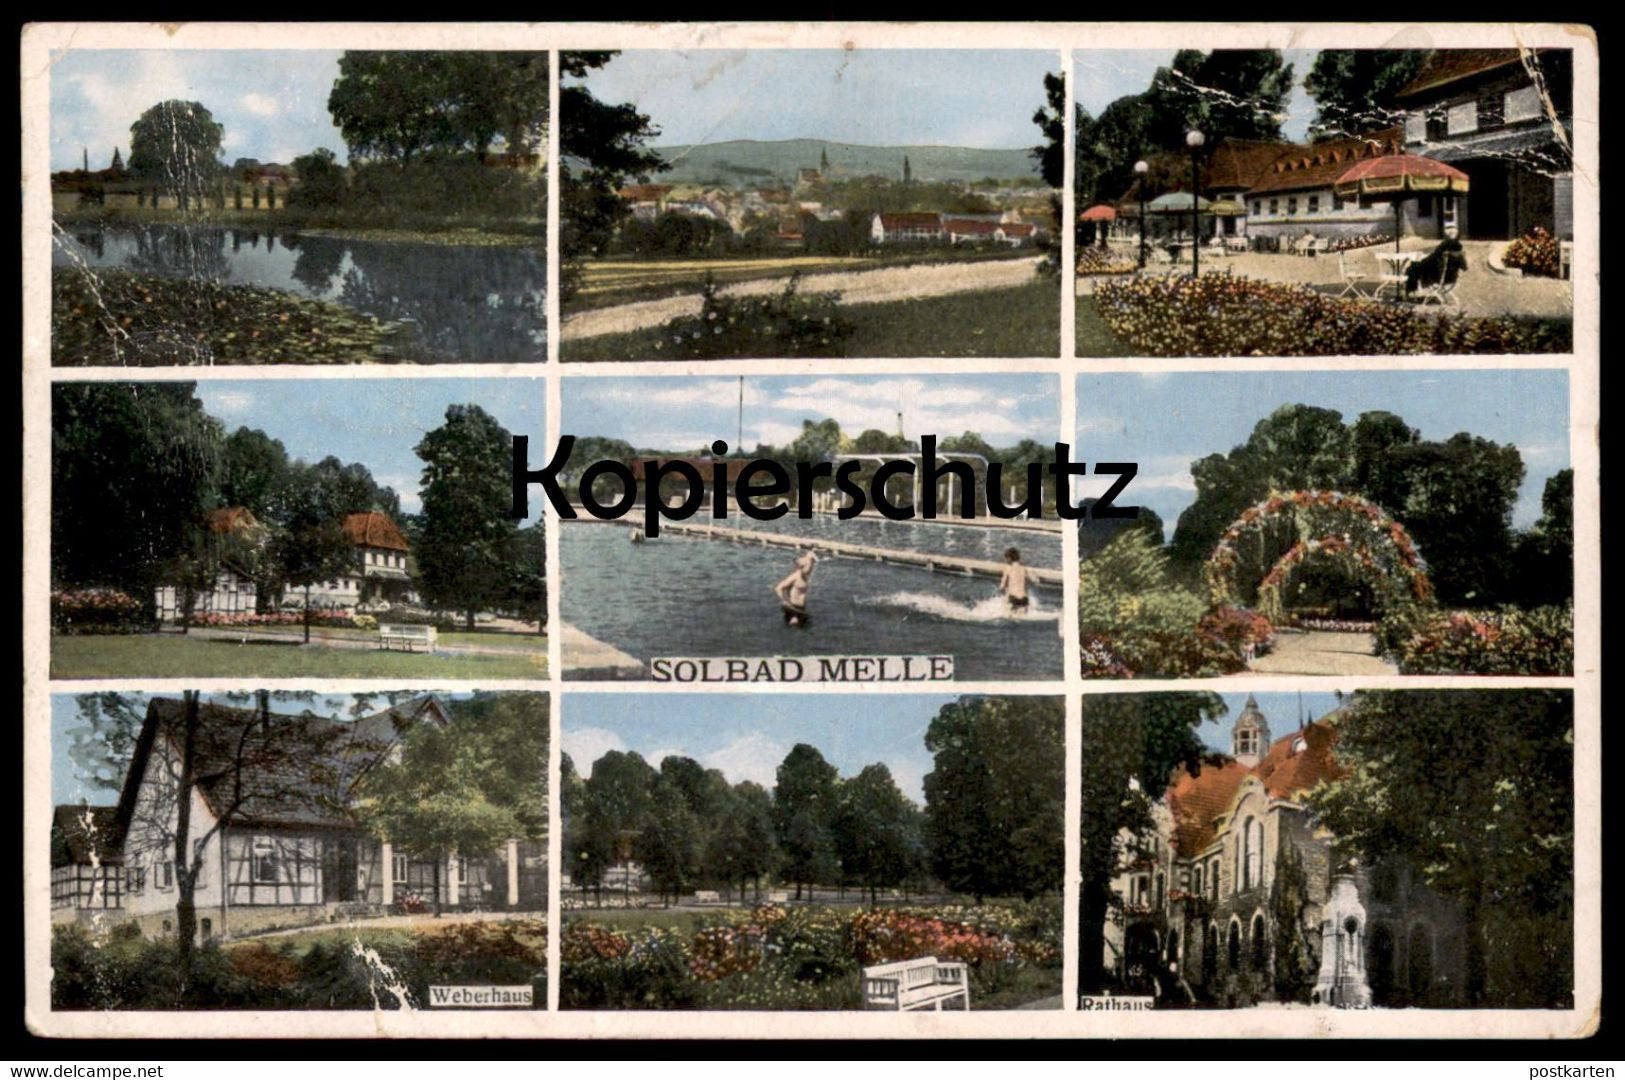 ALTE POSTKARTE SOLBAD MELLE 1942 RATHAUS WEBERHAUS RATHAUS BAD SCHWIMMBAD PANORAMA AK Ansichtskarte Cpa Postcard - Melle